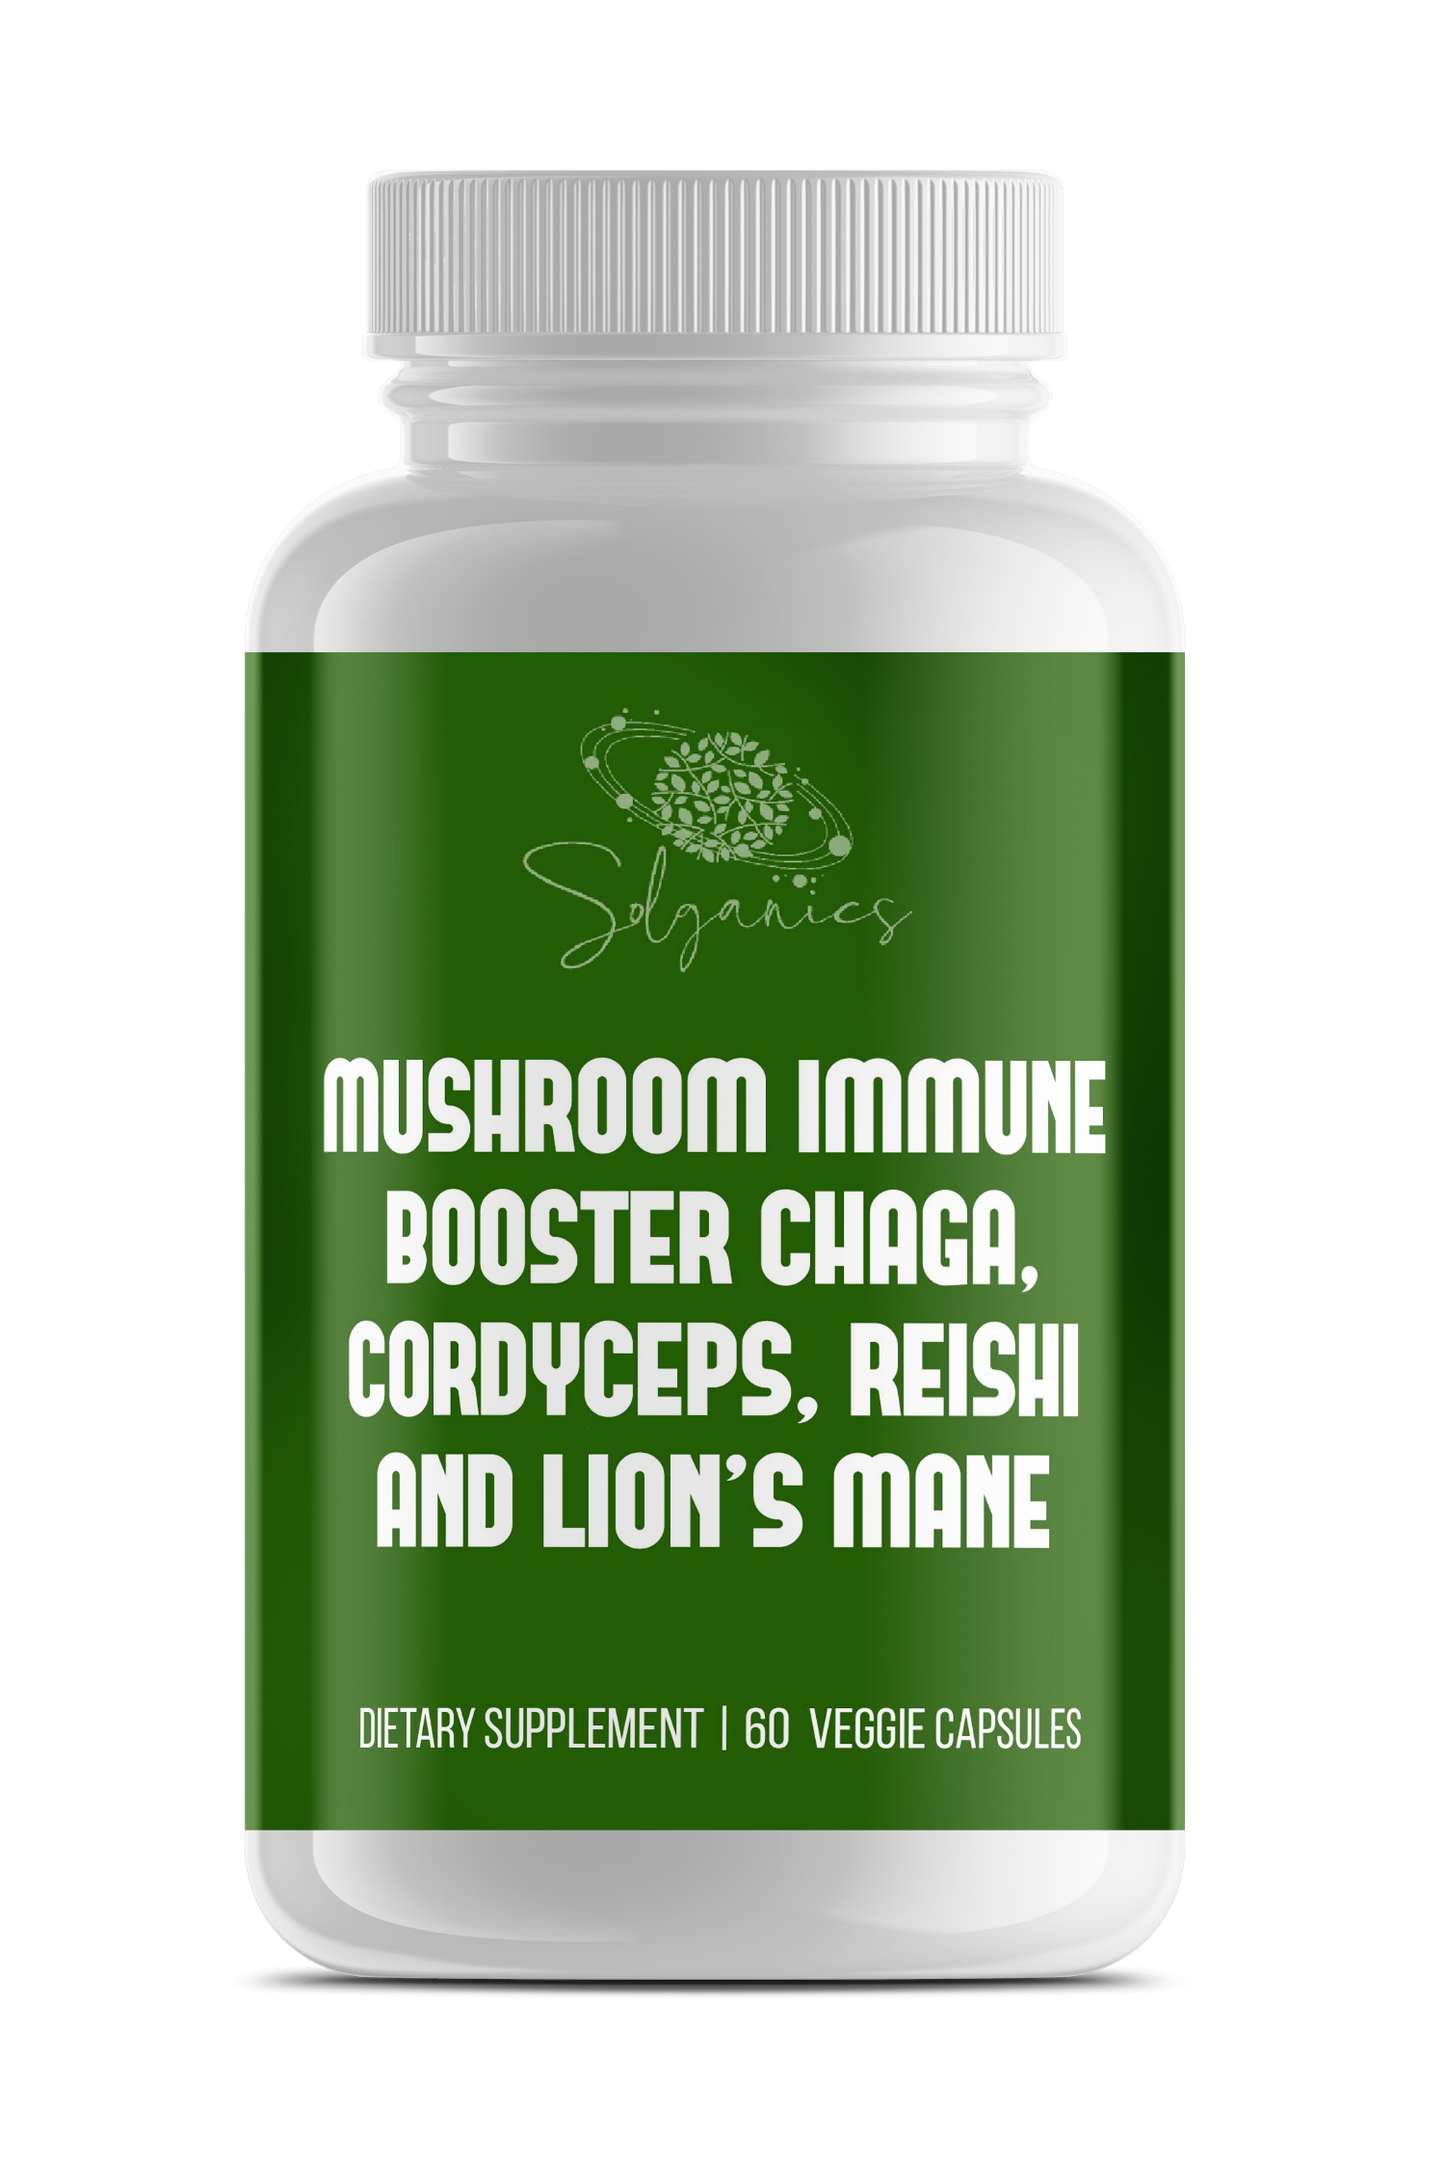 Mushroom Immune Booster: Chaga, Cordyceps, Reishi and Lion’s Mane